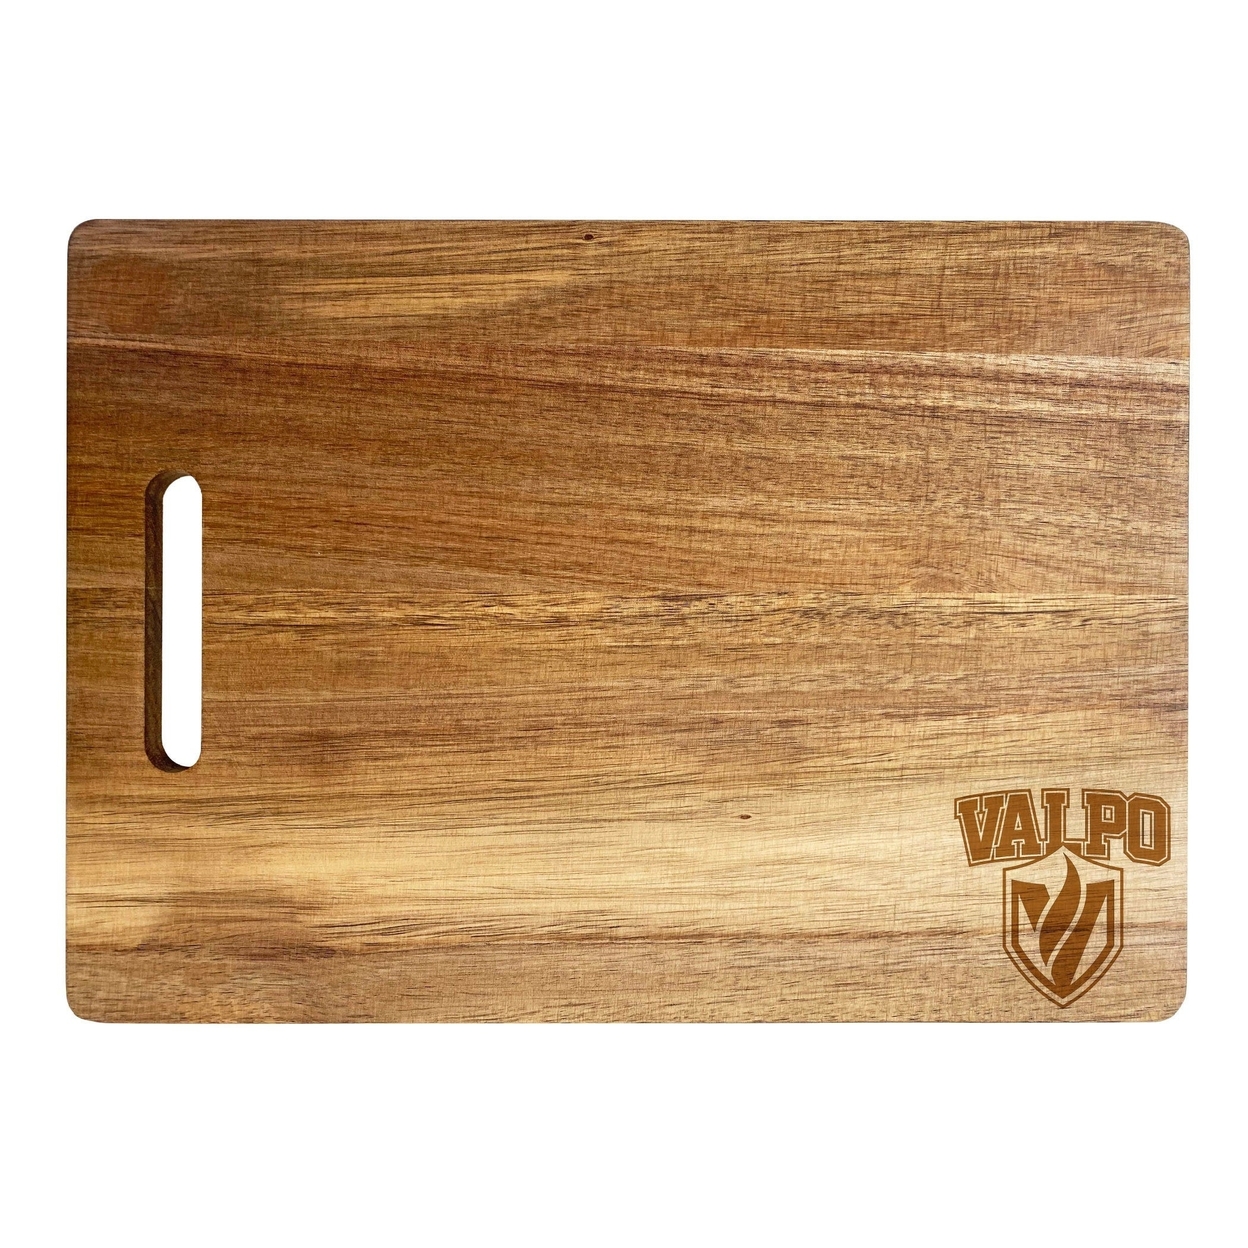 Valparaiso University Engraved Wooden Cutting Board 10 X 14 Acacia Wood - Small Engraving